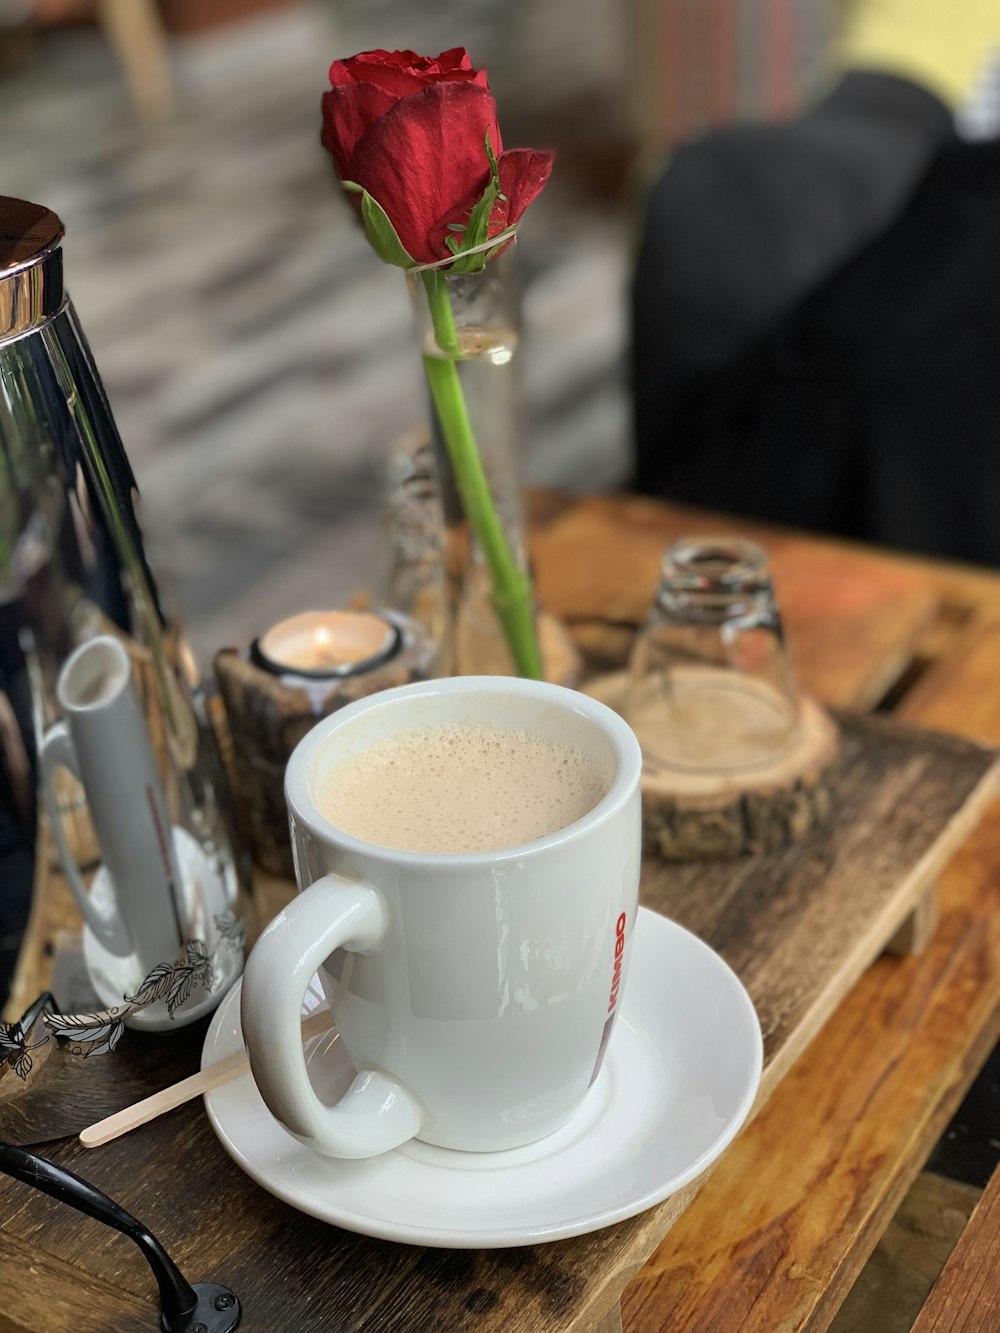 coffee in mug on saucer beside red rose